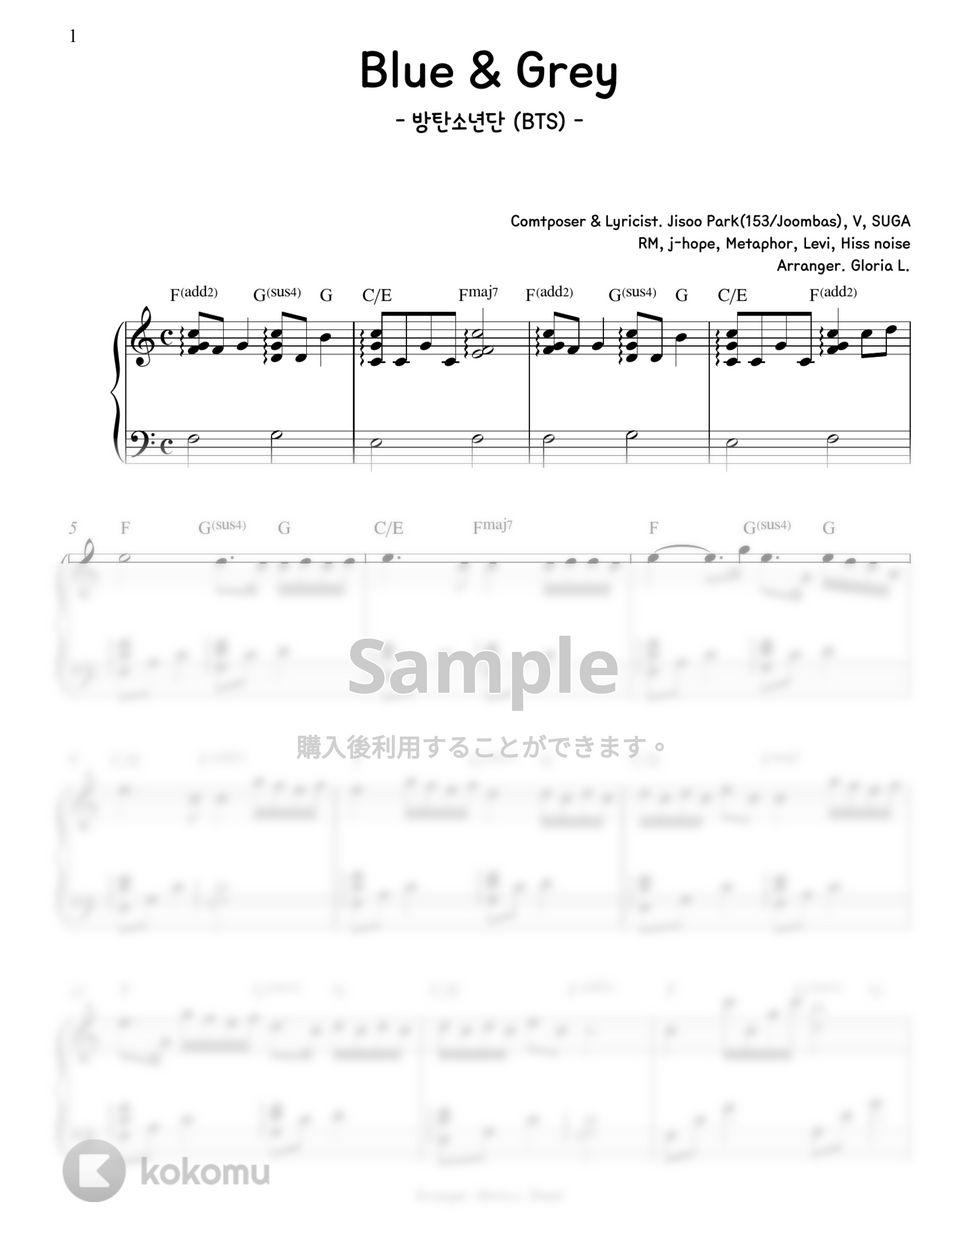 防弾少年団(BTS) - Blue & Grey (Easy transpose) by Gloria L.